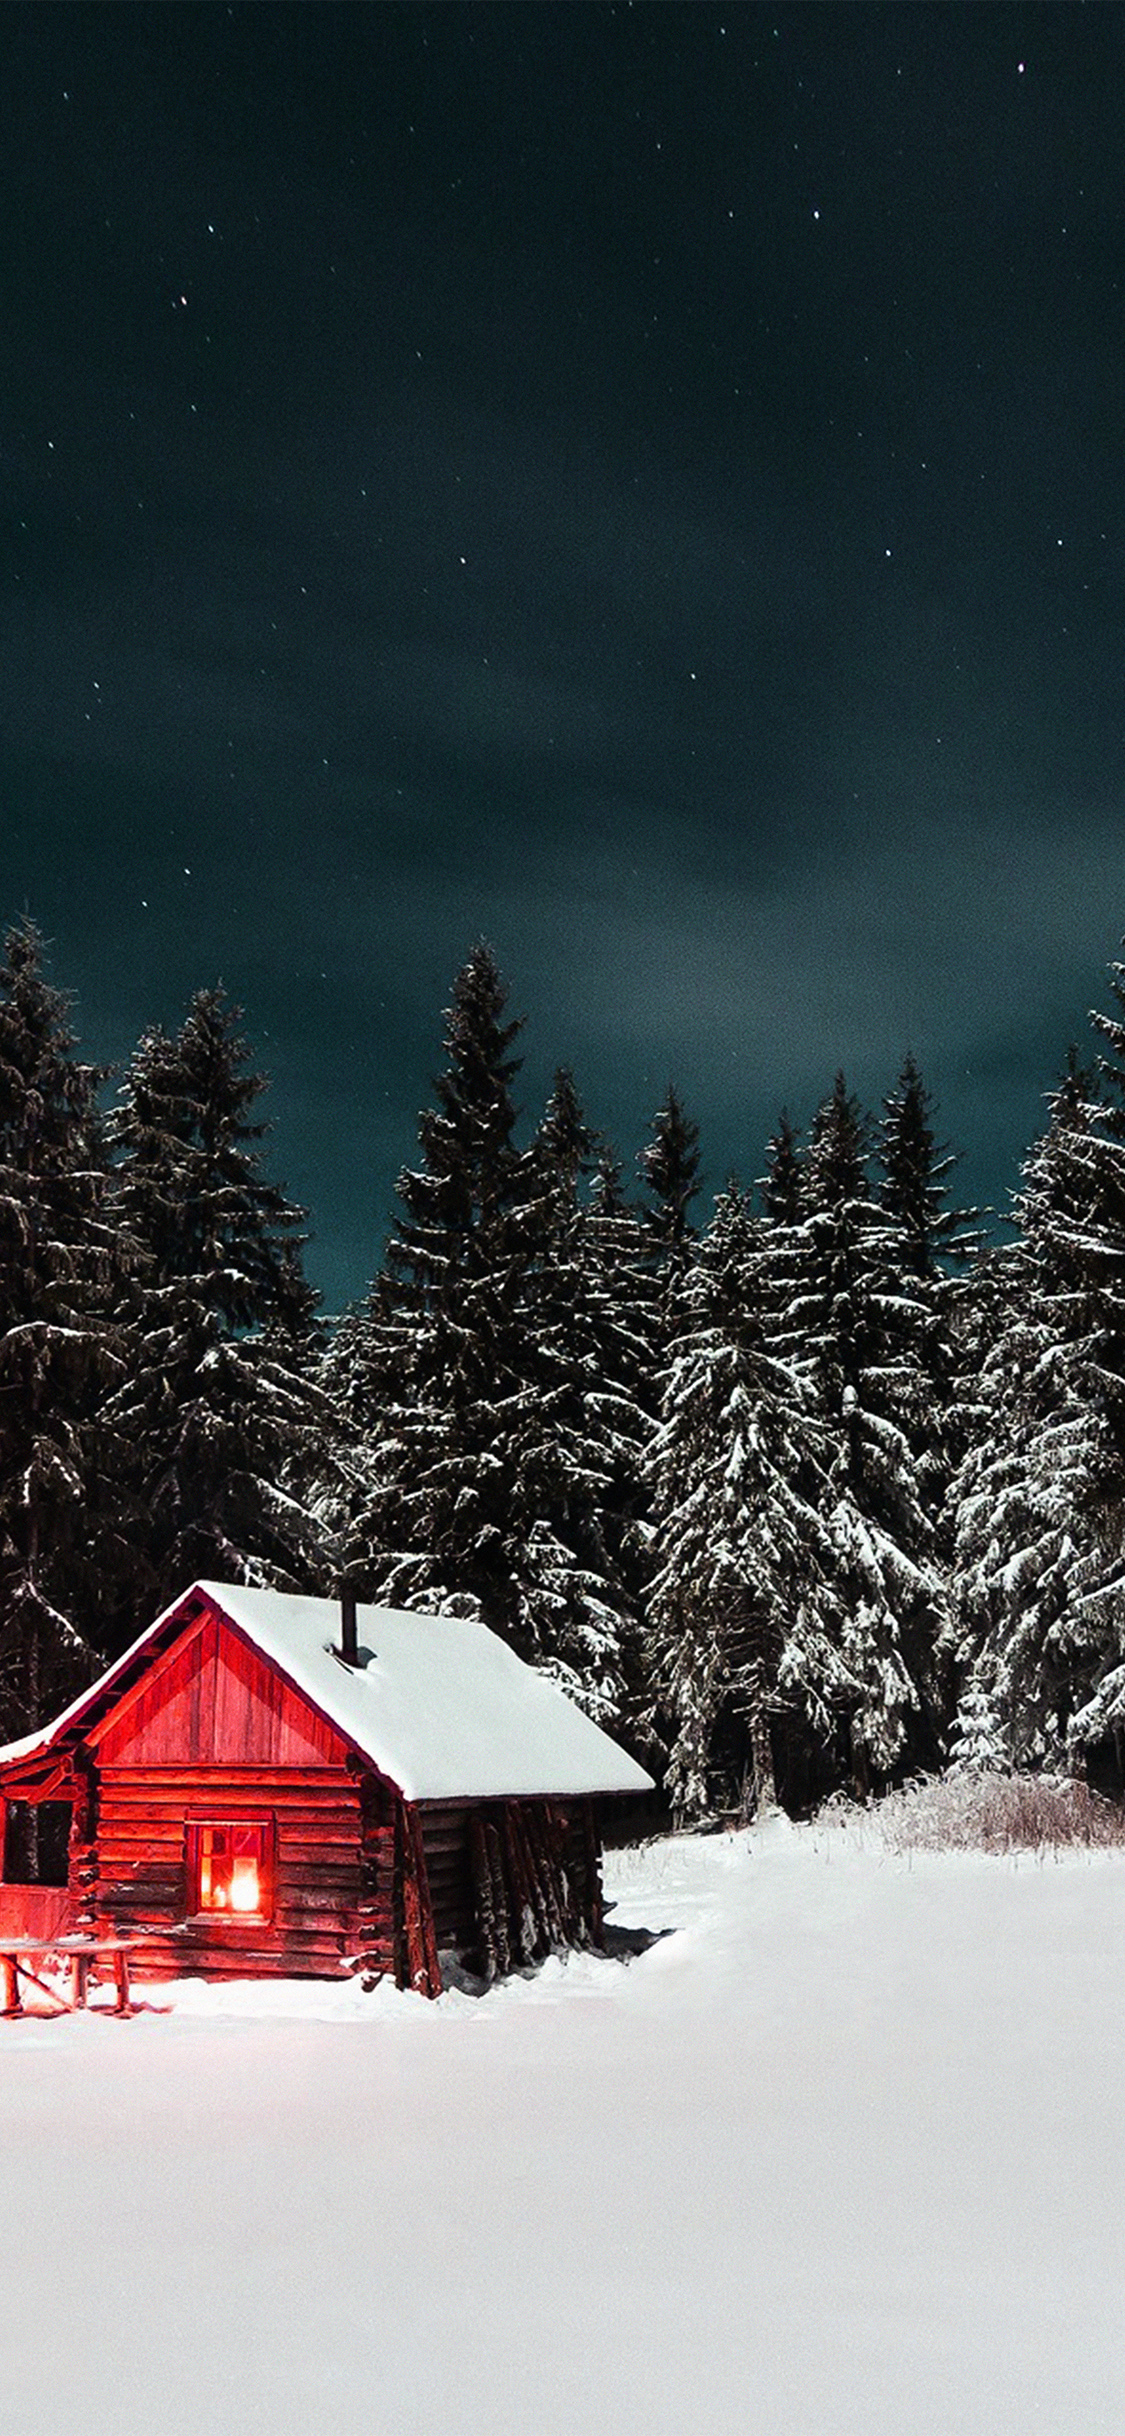 1125x2436 | iPhone11 wallpaper | nl38-winterhouse-night-sky-christmas-starry